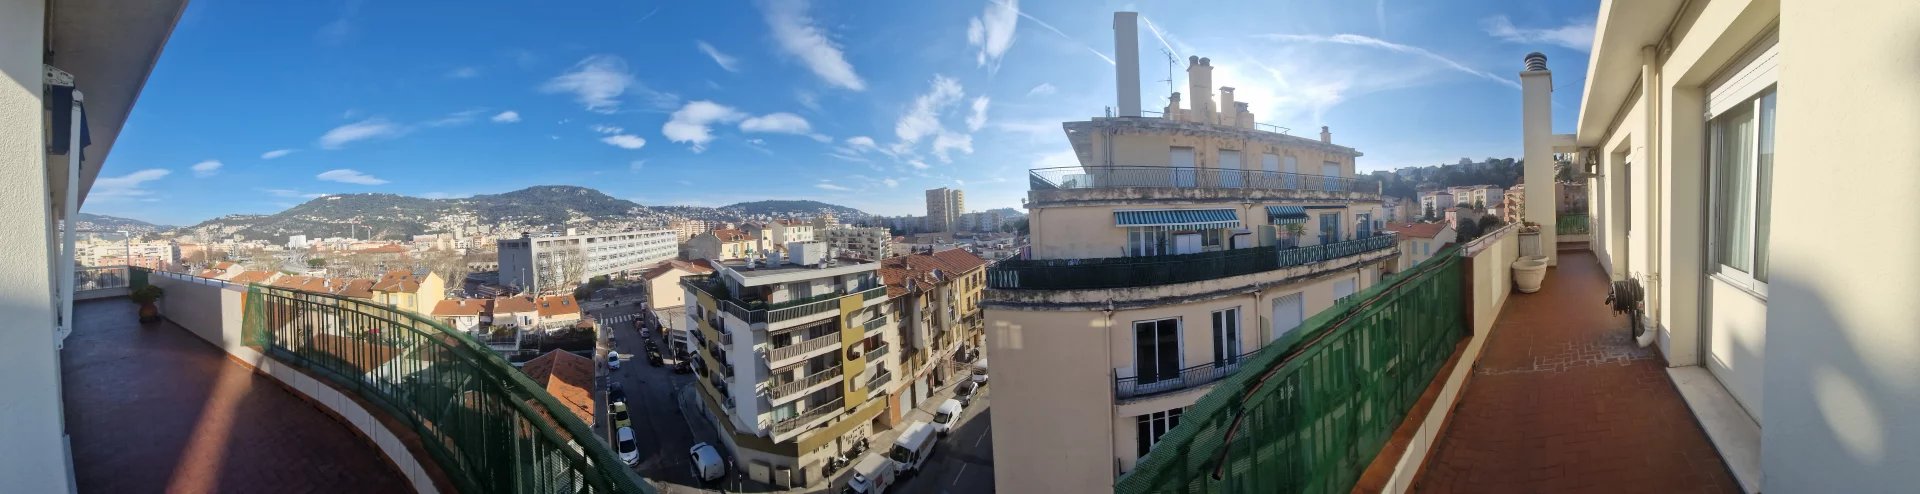 Vente Appartement 81m² 4 Pièces à Nice (06300) - Lubiana Immobilier